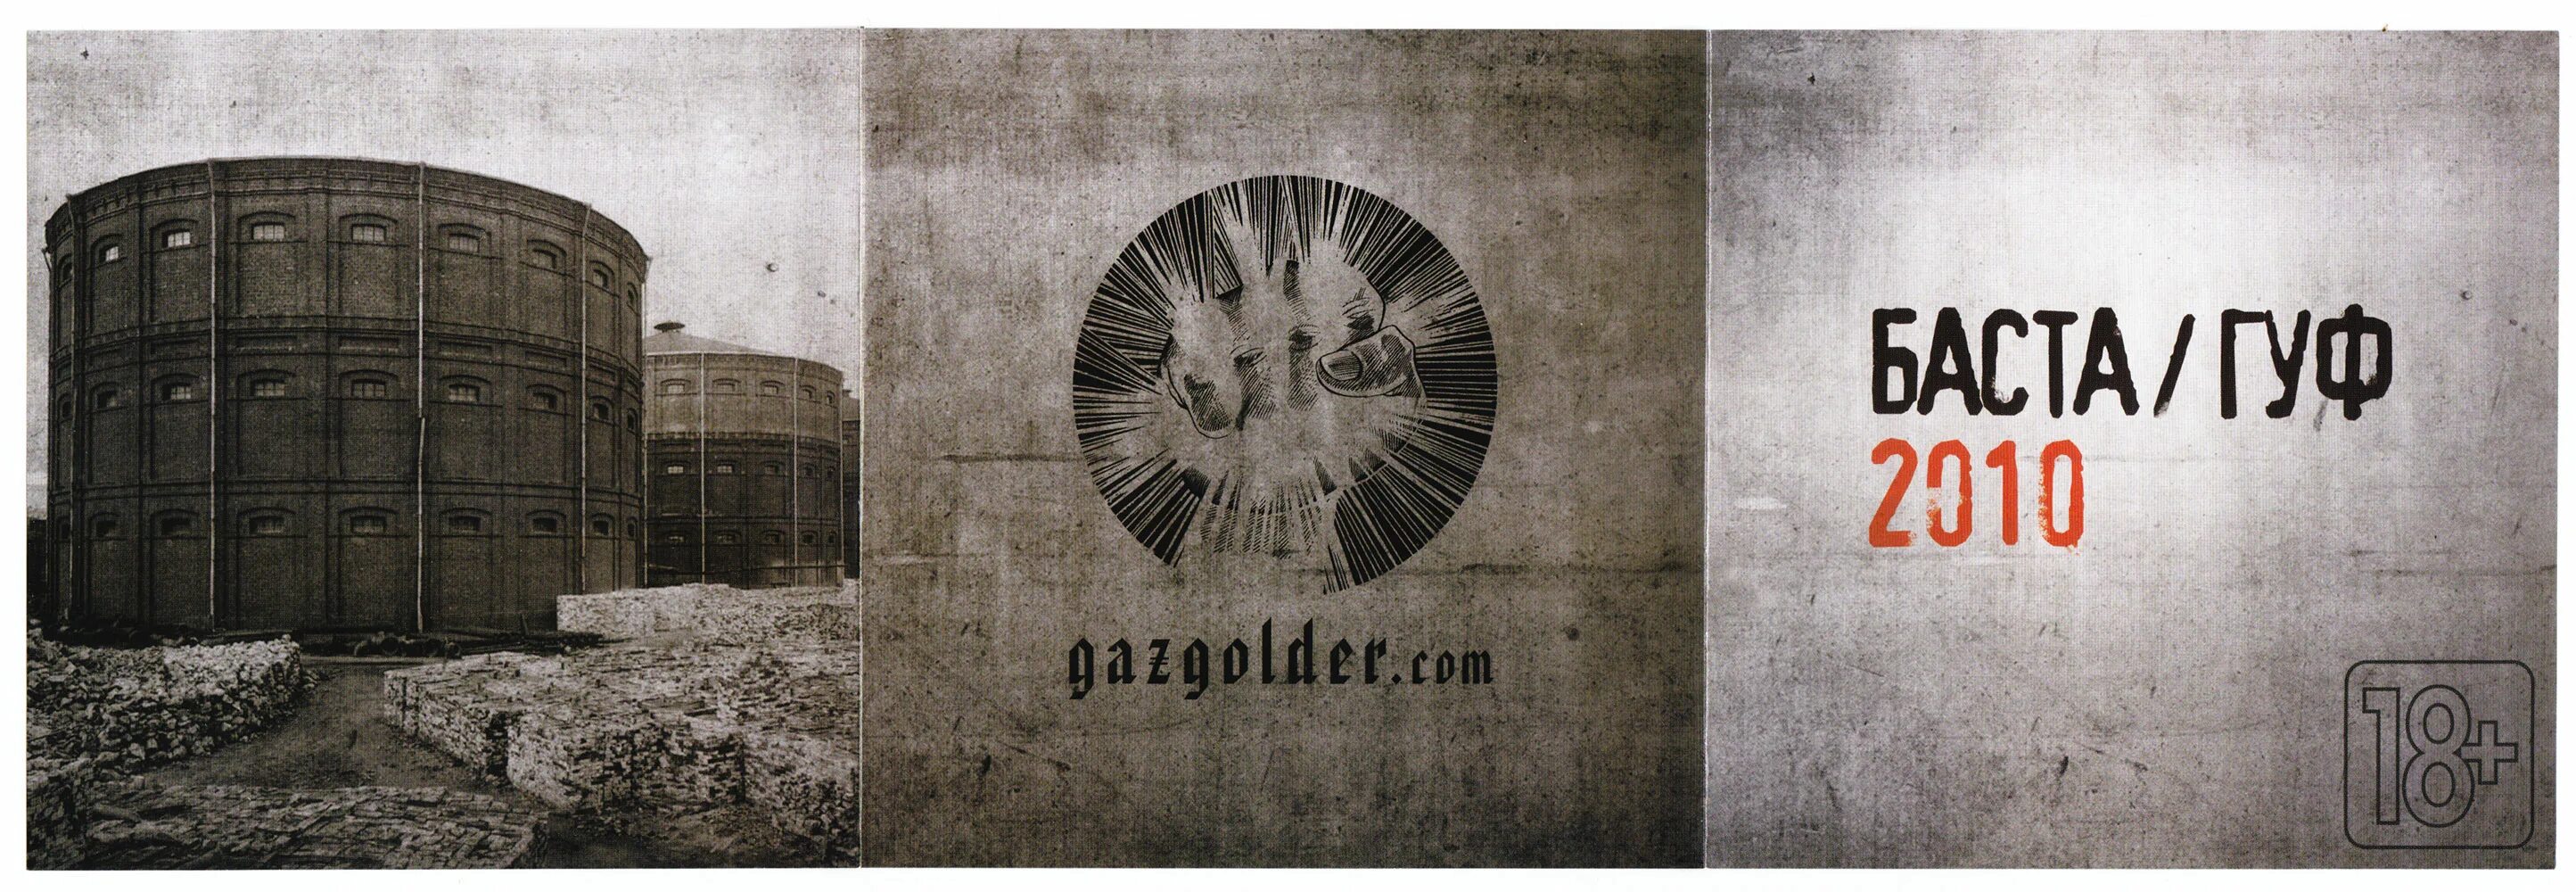 Музыку баста гуф. Баста Гуф обложка альбома. Баста Гуф 2010. Баста и Гуф. Газгольдер лейбл.